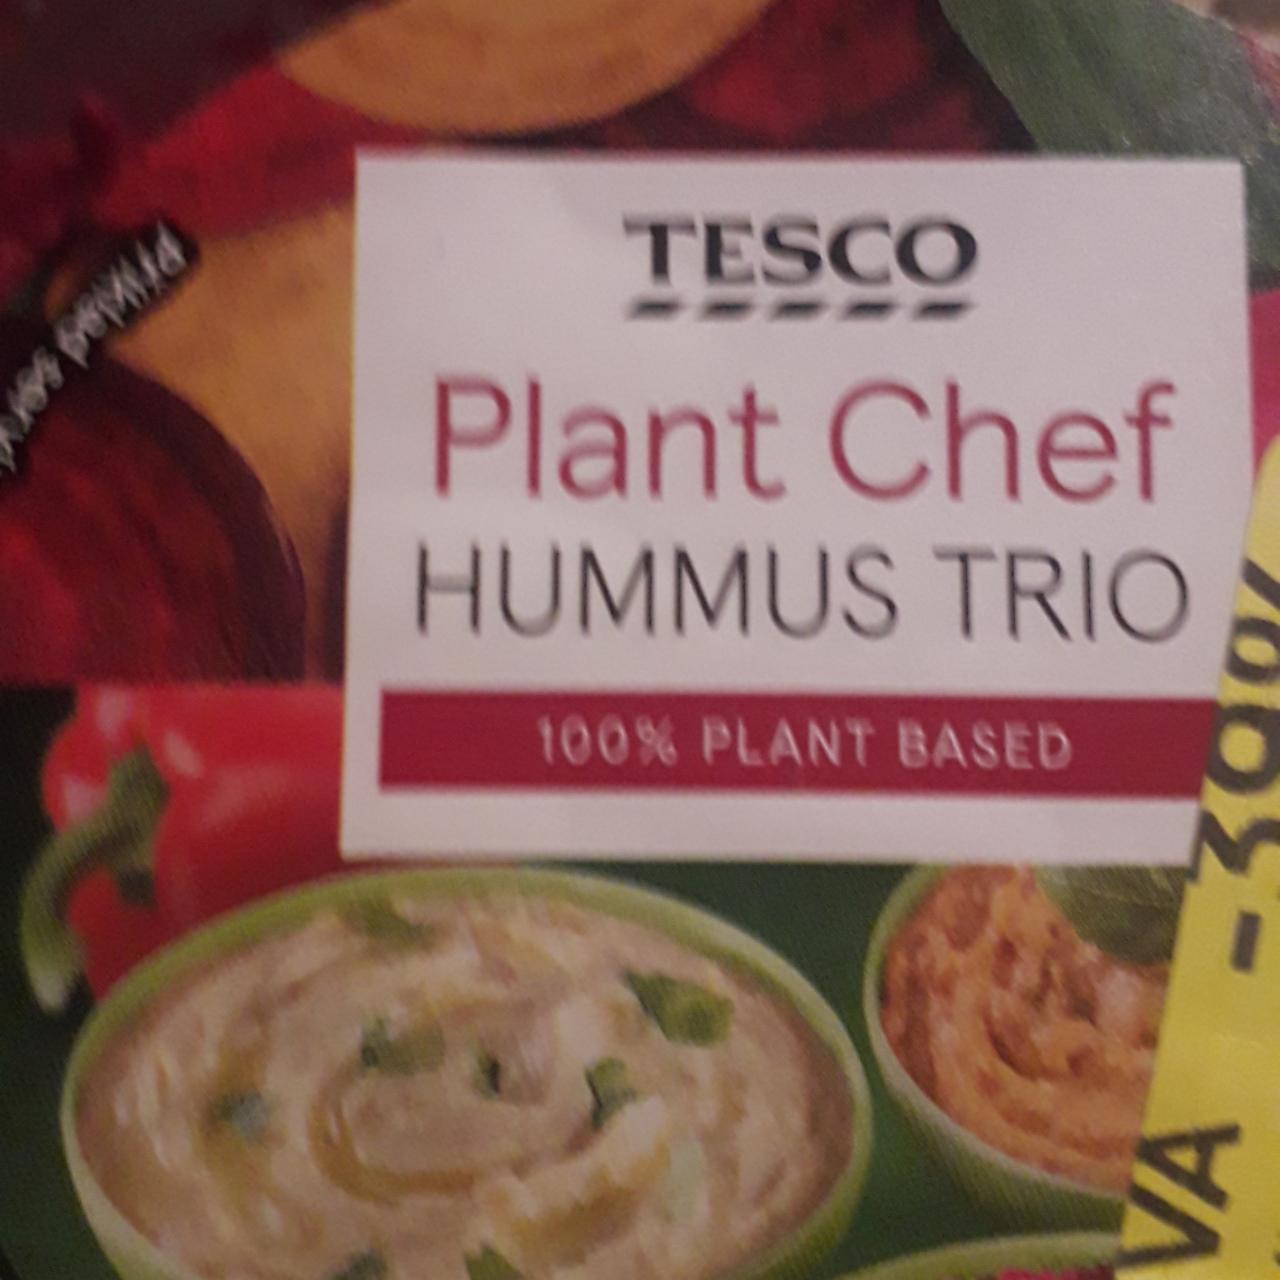 Képek - Plant Chef Hummus trio Tesco